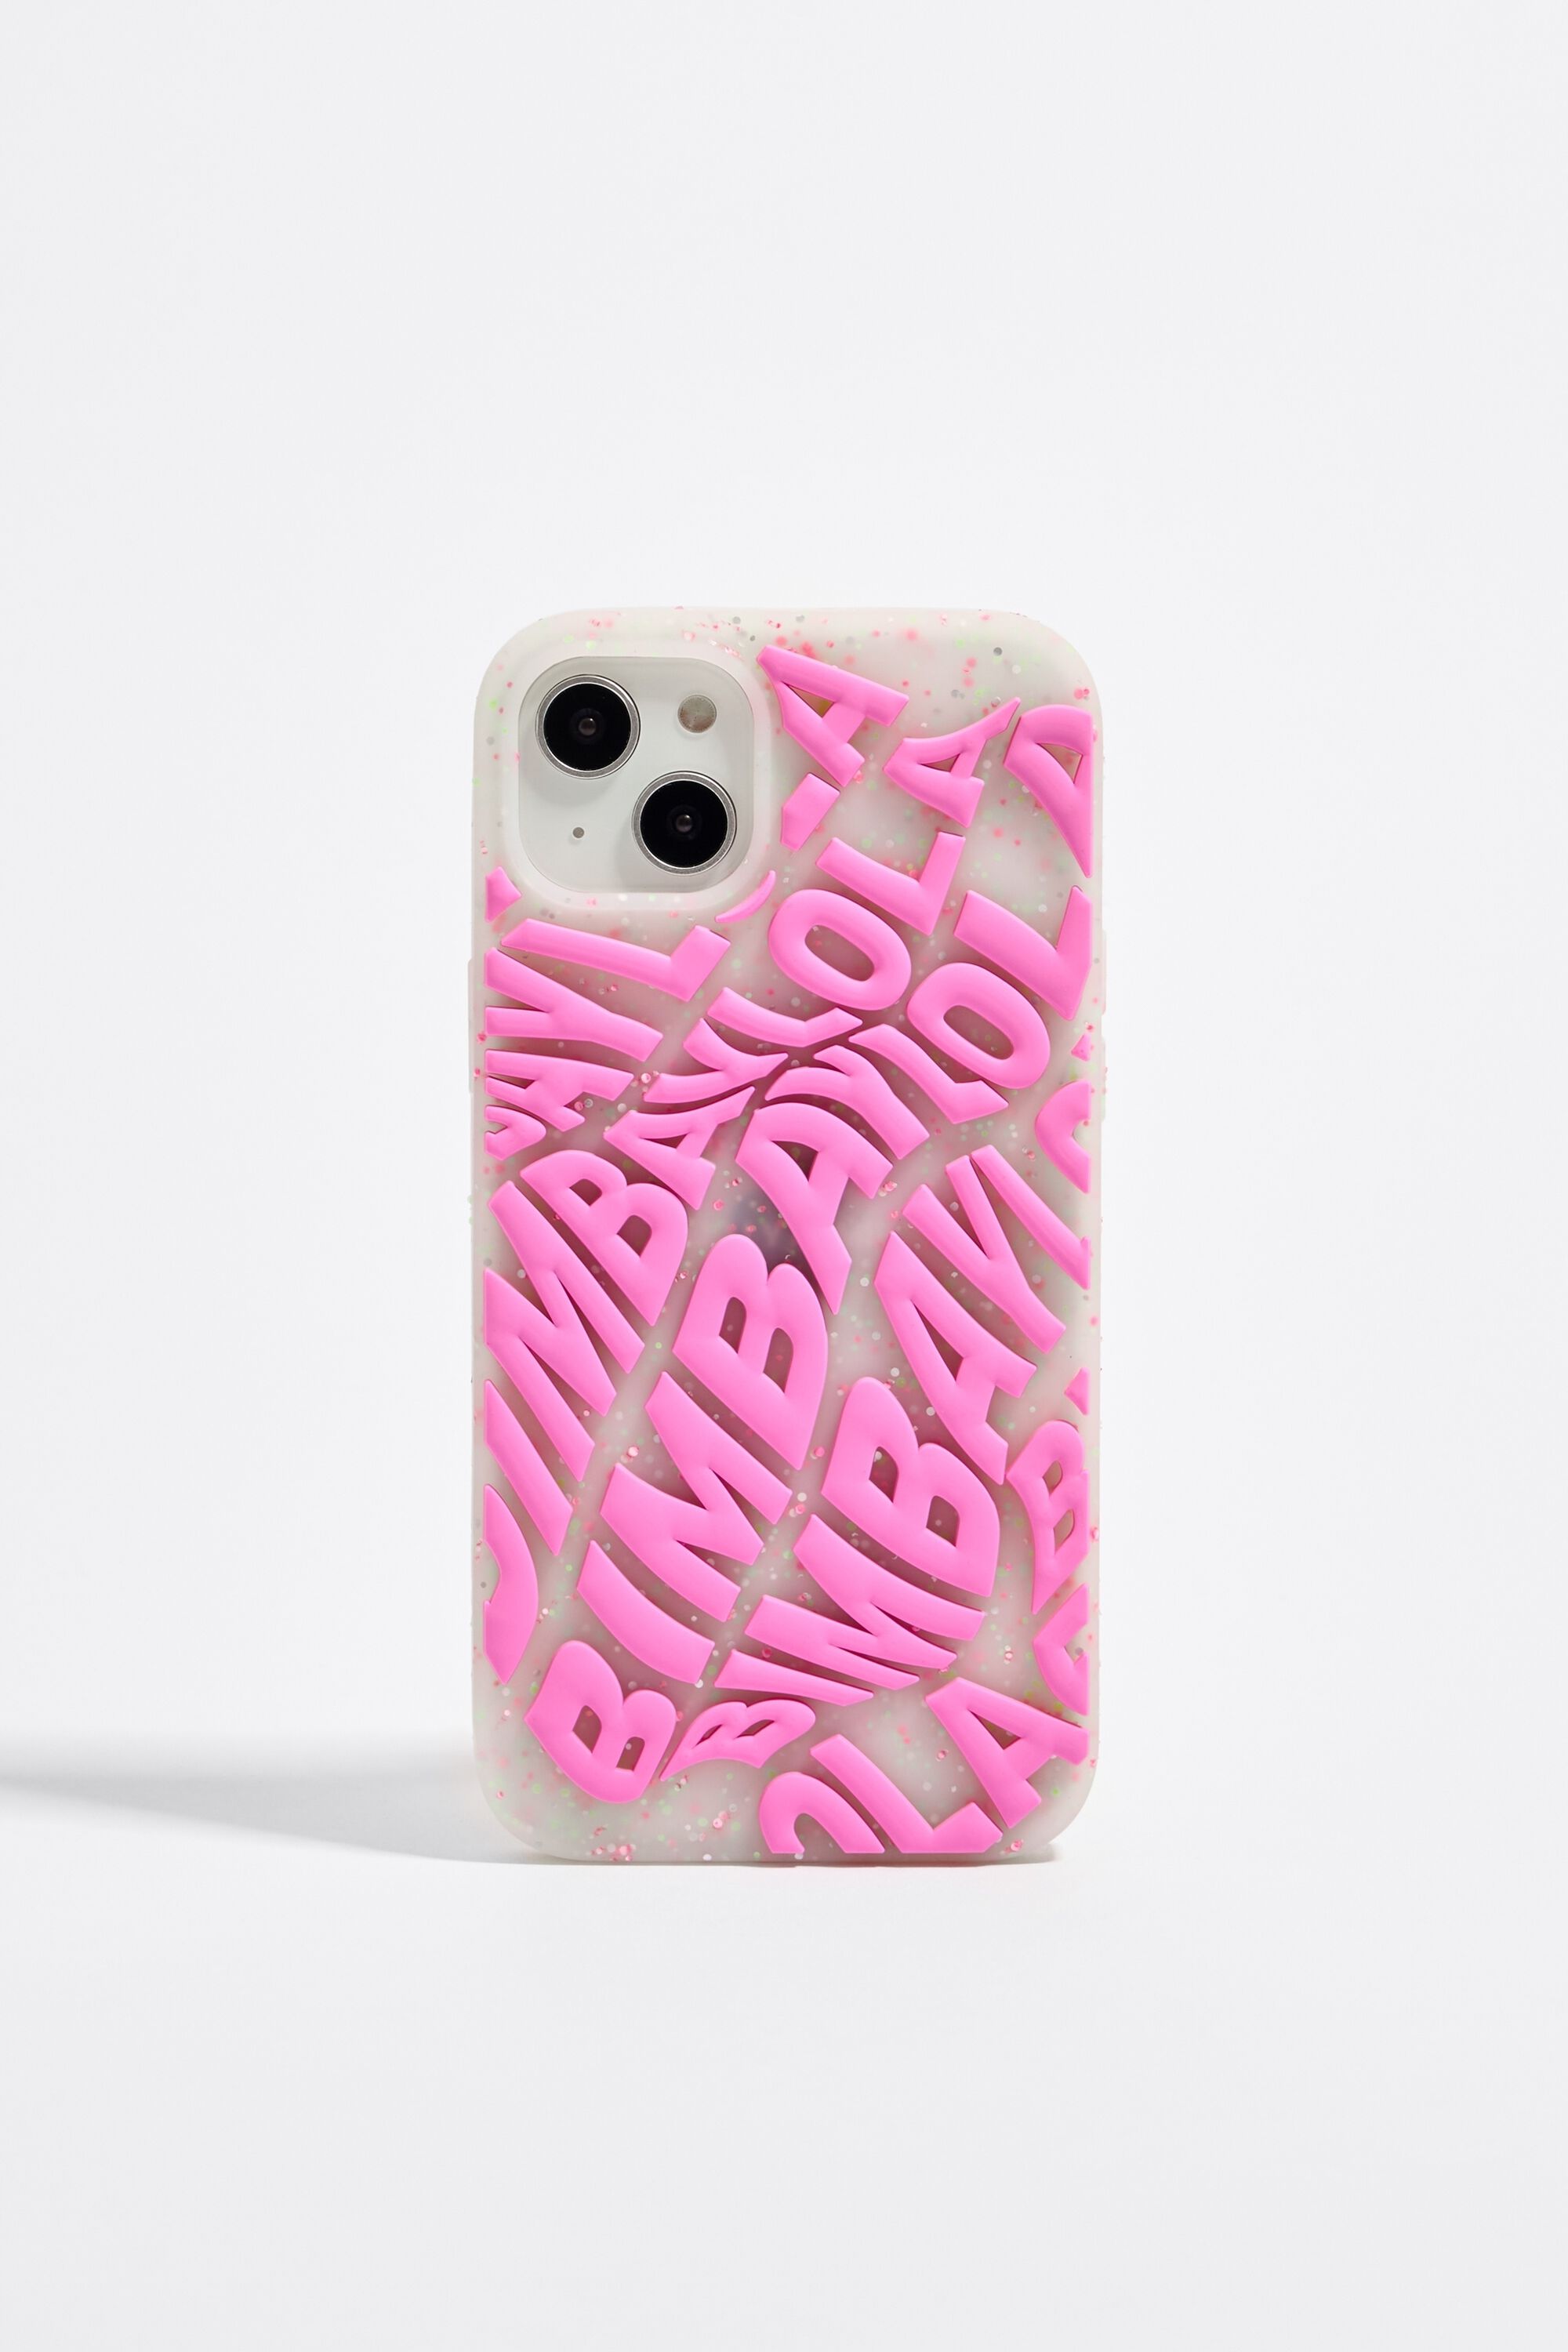 Funda de silicona iphone rosa chicle - Sibersus